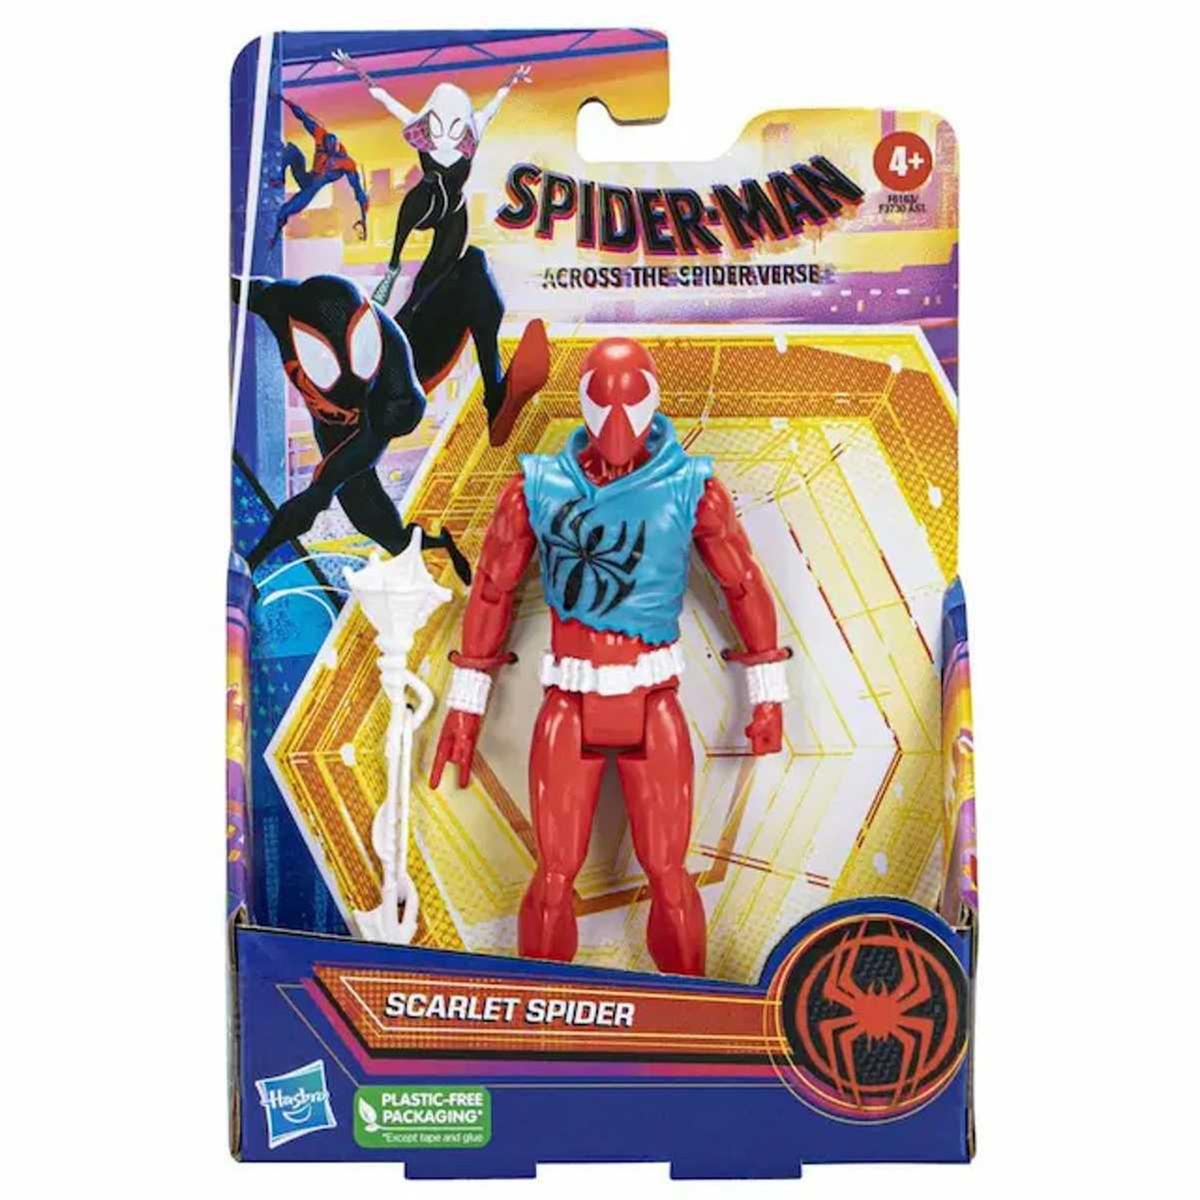 Marvel - Spider-man - Spider-Verse multiverso aranha brinquedo ㅤ | SPIDERMAN  | Loja de brinquedos e videojogos Online Toysrus